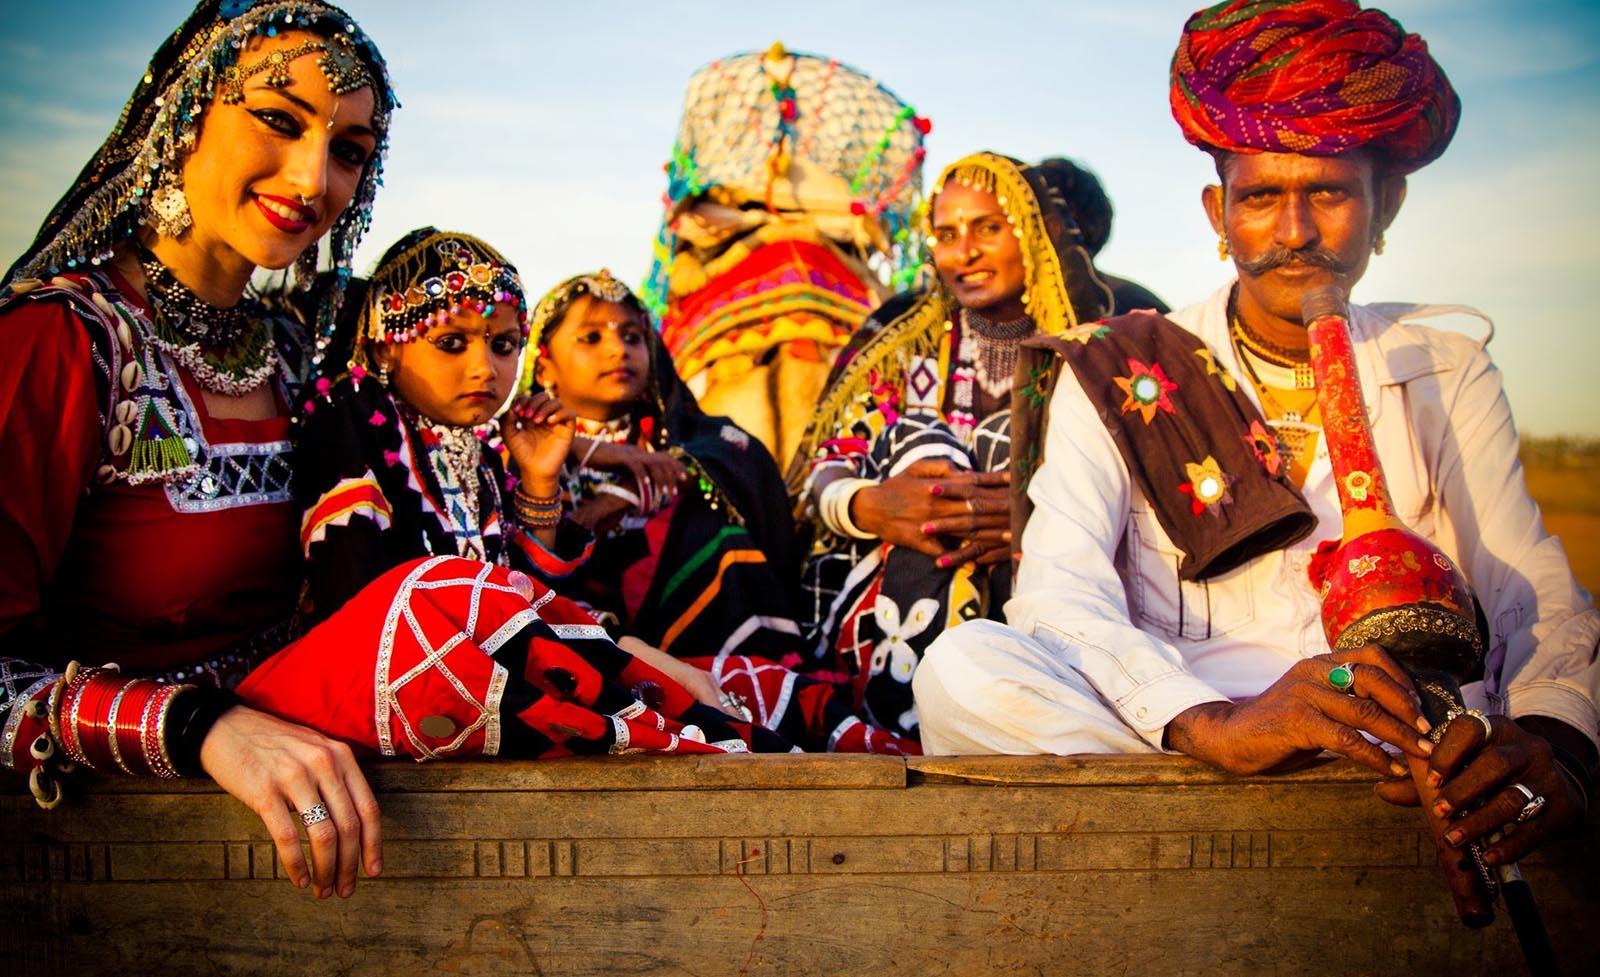 rajasthan-poeple-indian-culture